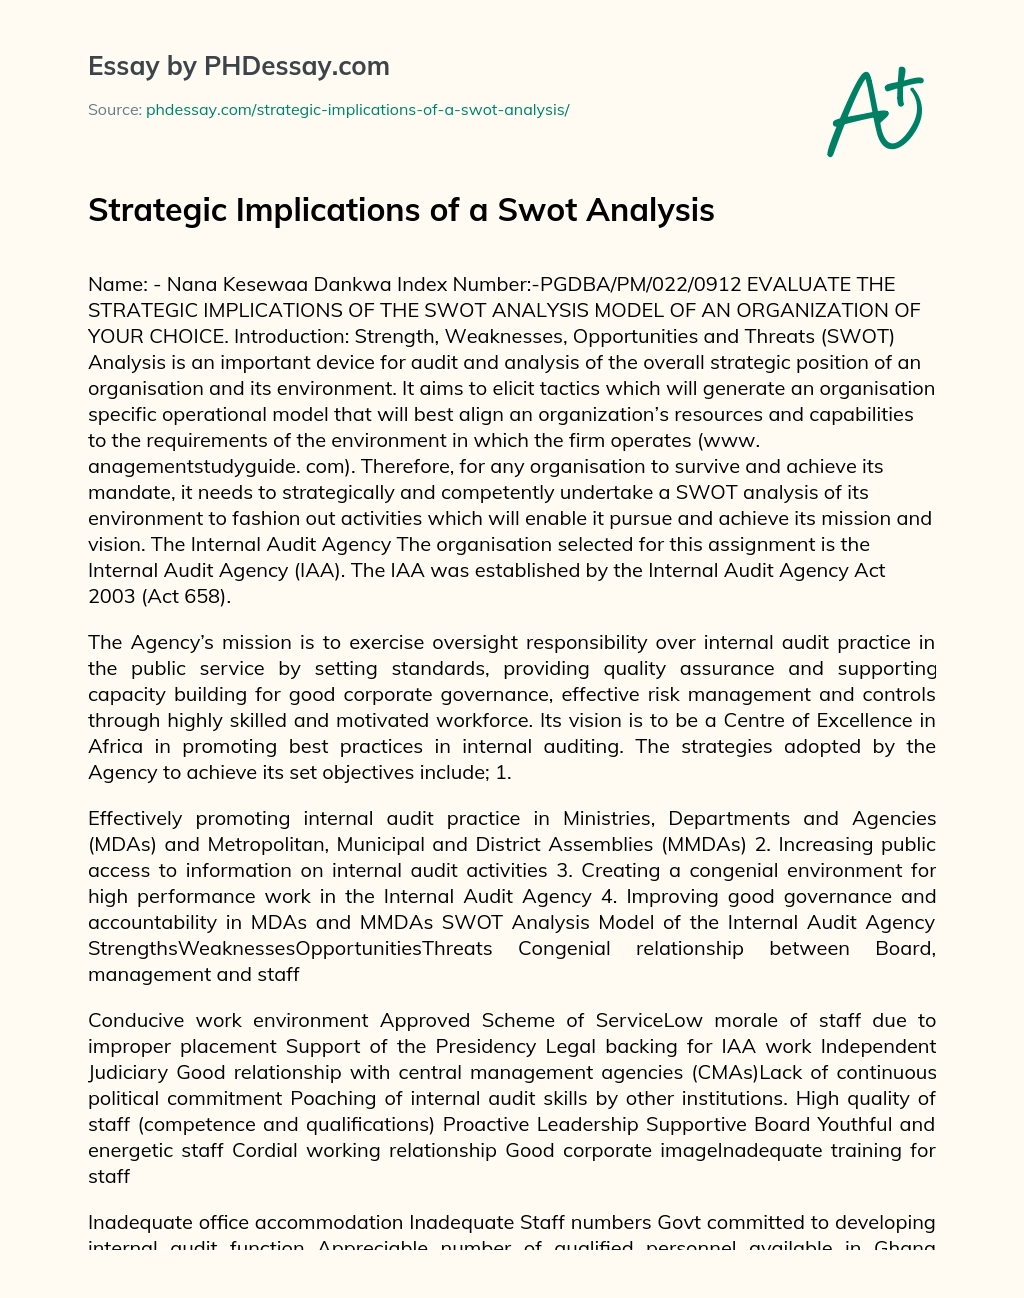 Strategic Implications of a Swot Analysis essay